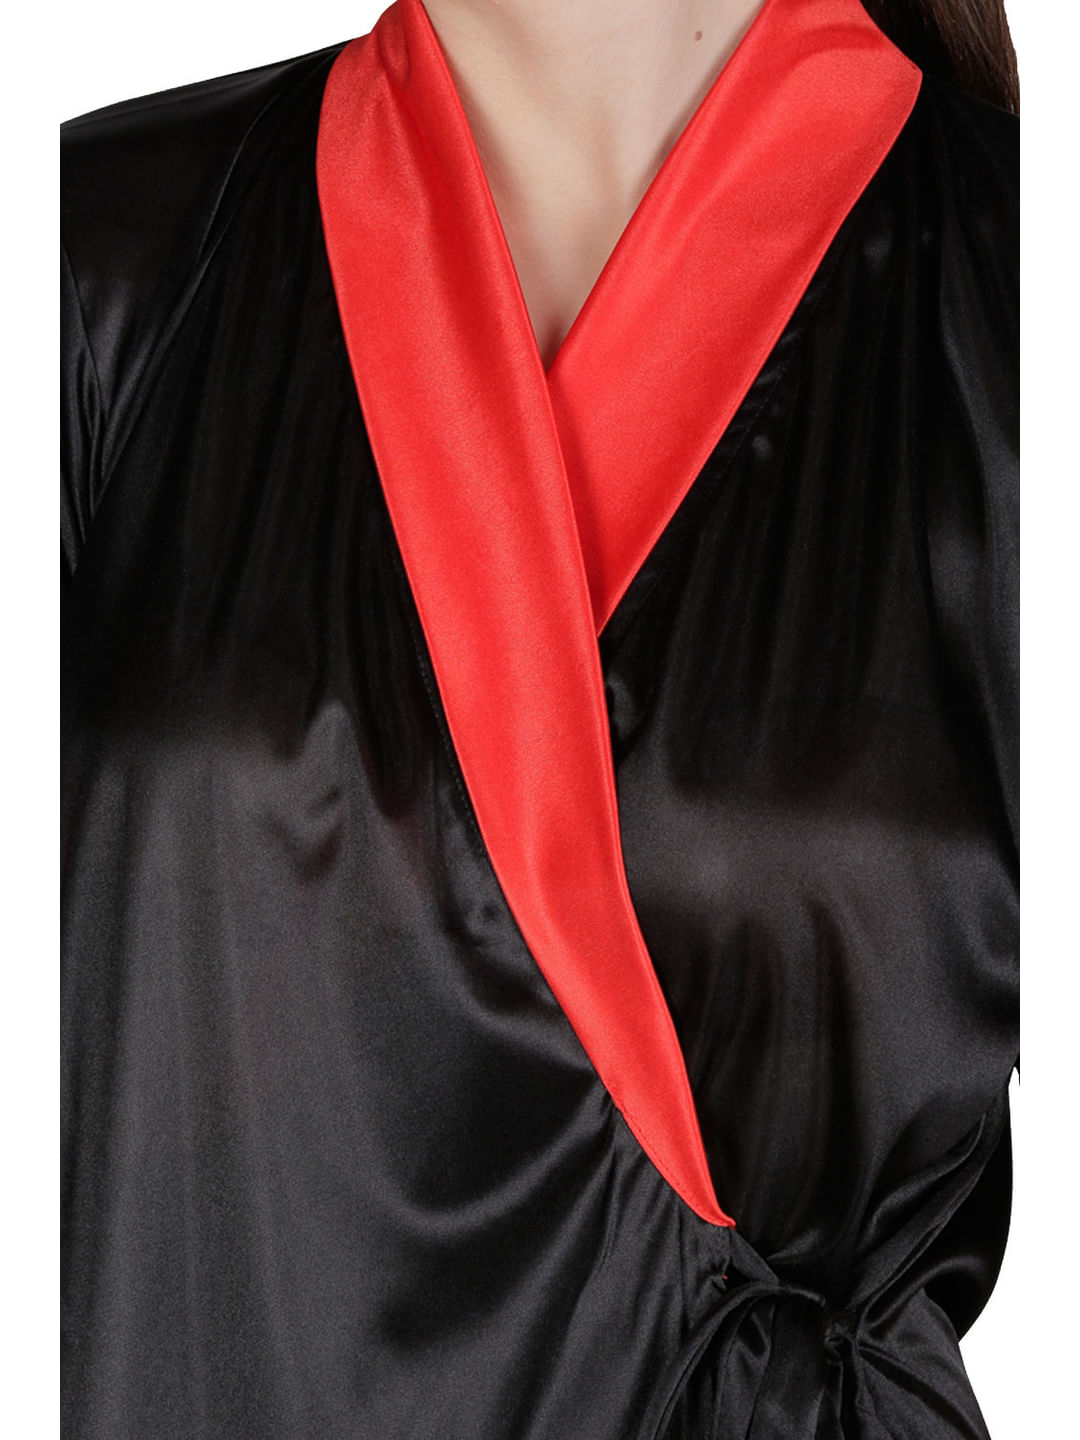 Satin Red, Black Robe, Housecoat (Free Size, HC-52)